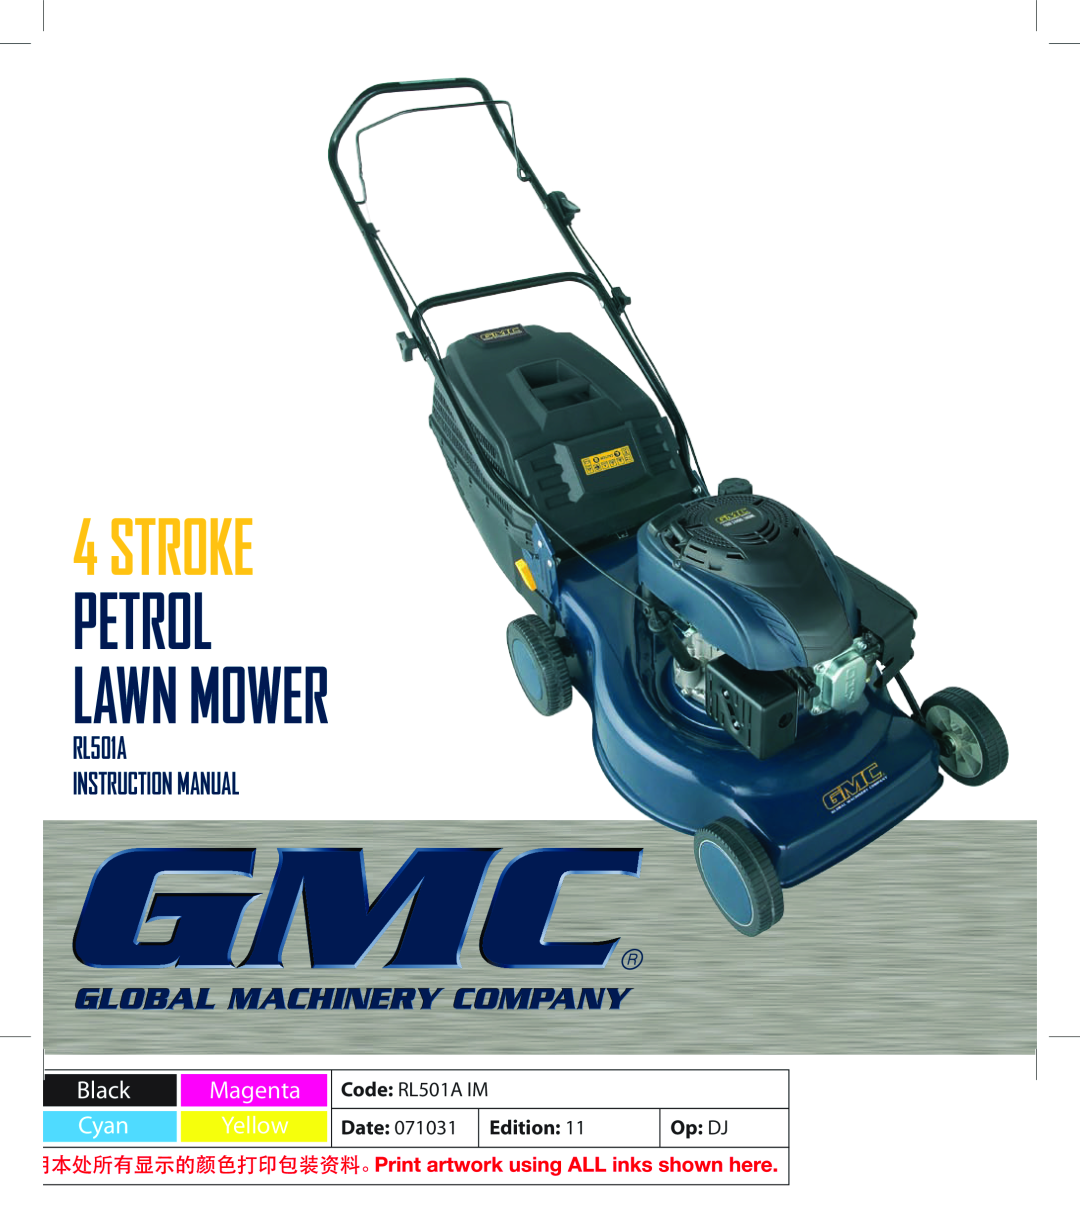 Global Machinery Company instruction manual Code RL501A IM, Stroke Petrol Lawn Mower, Black Magenta Cyan Yellow 